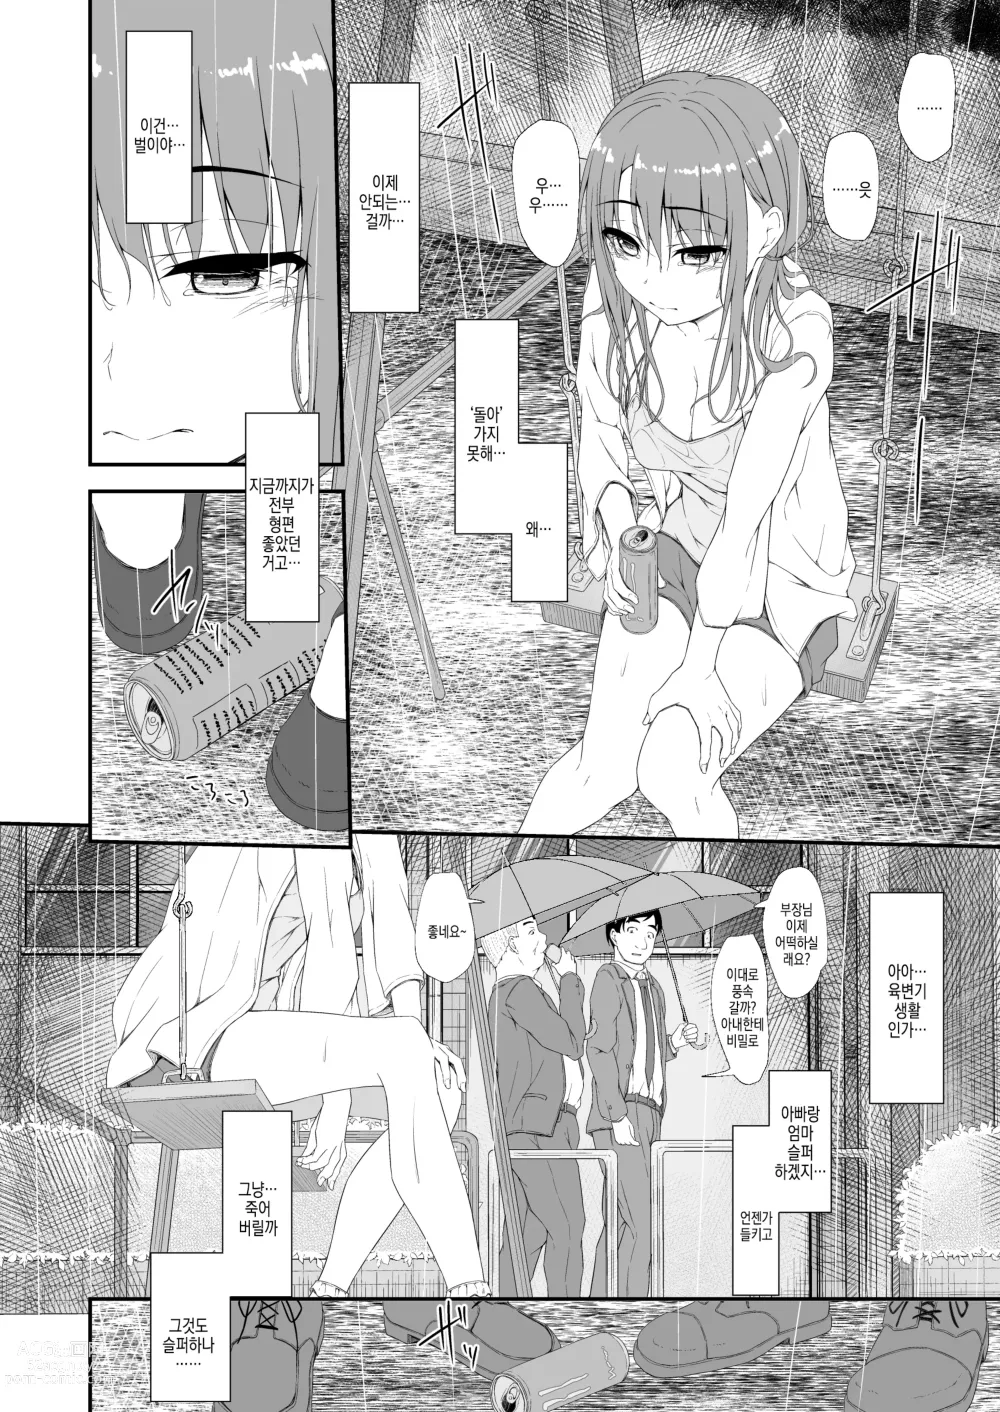 Page 6 of doujinshi ReTemptation 6